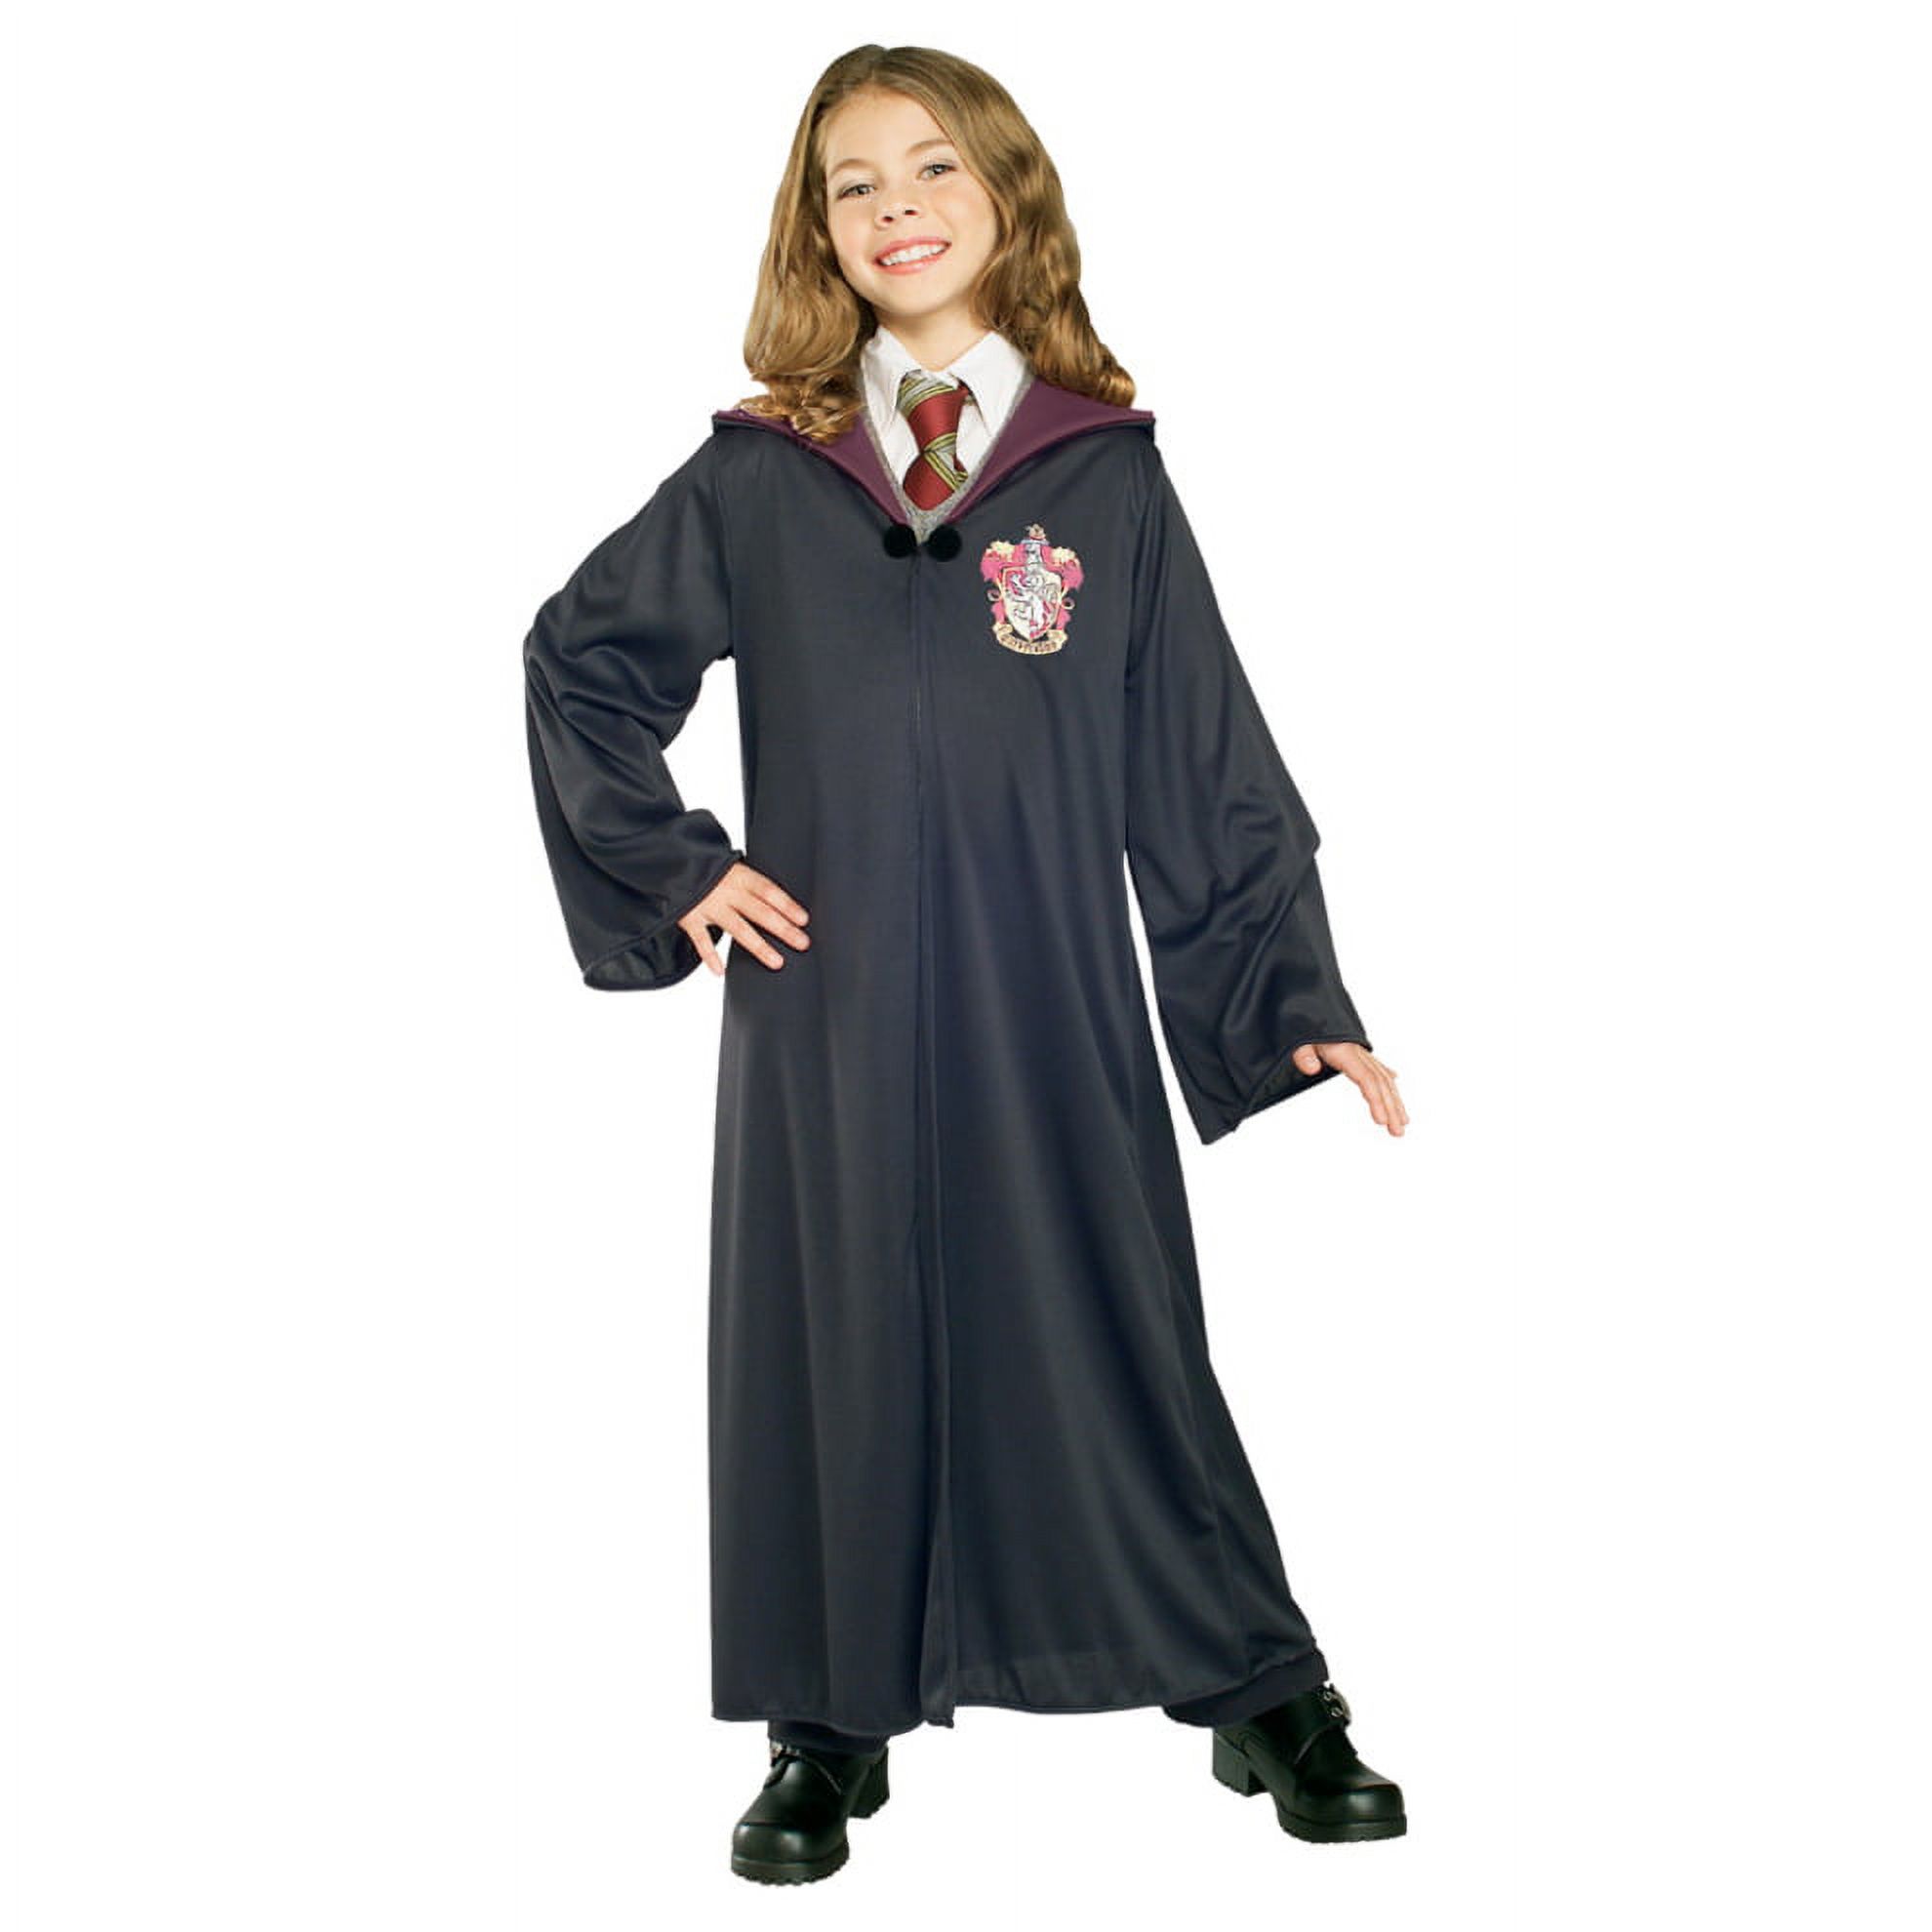 Harry Potter Gryffindor Robe Child Halloween Costume - image 2 of 2